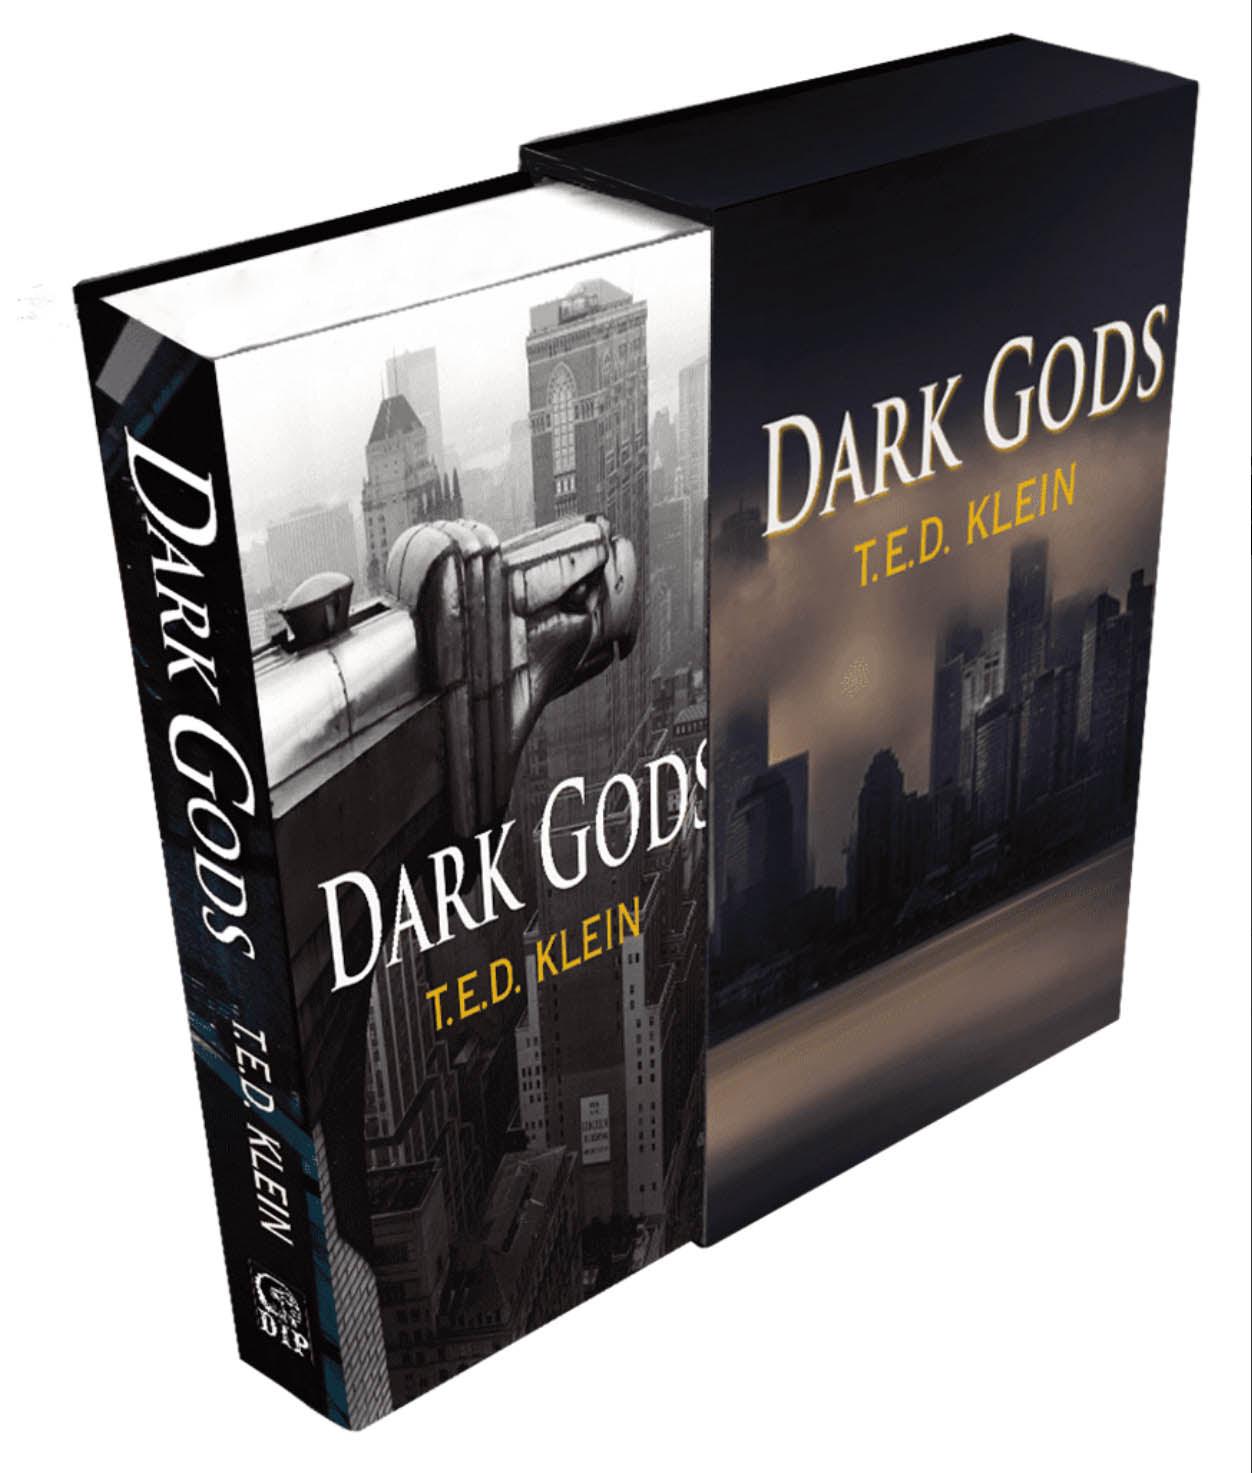 Dark Gods by T.E.D. Klein Signed Numbered Slipcased Hardcover